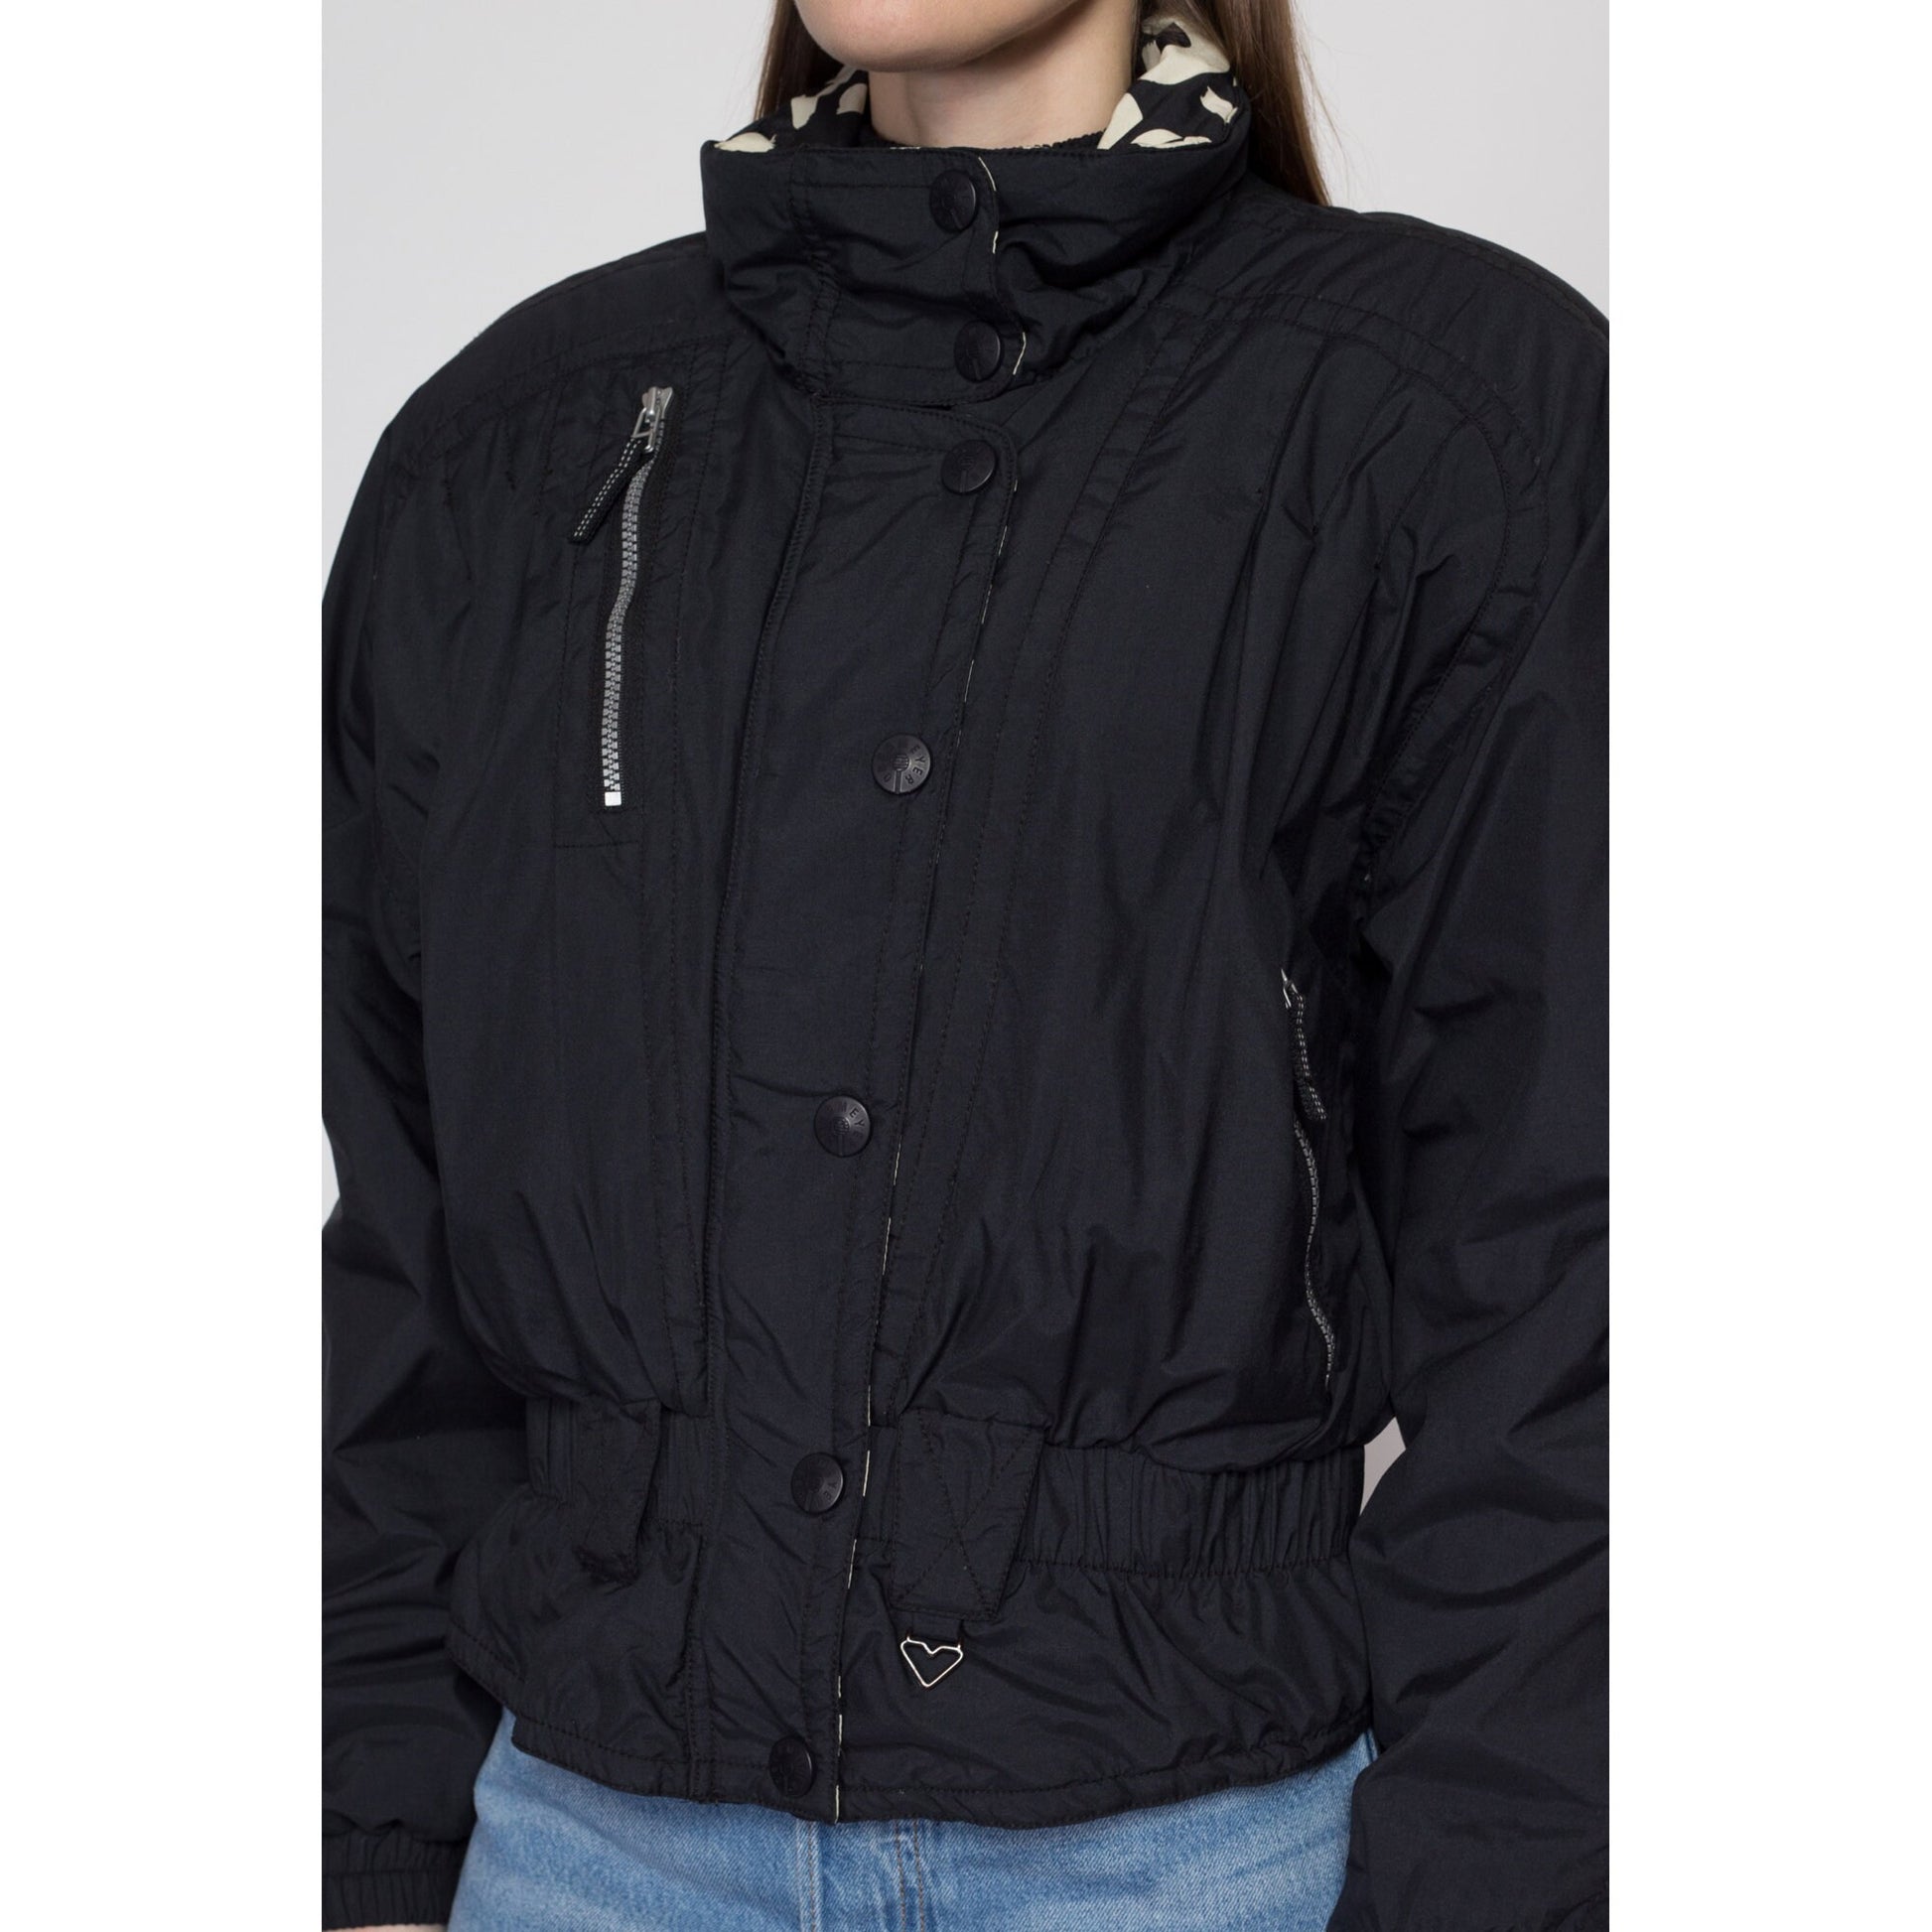 Medium 80s Black & White Obermeyer Ski Jacket | Vintage Zip Up Winter Puffy Coat